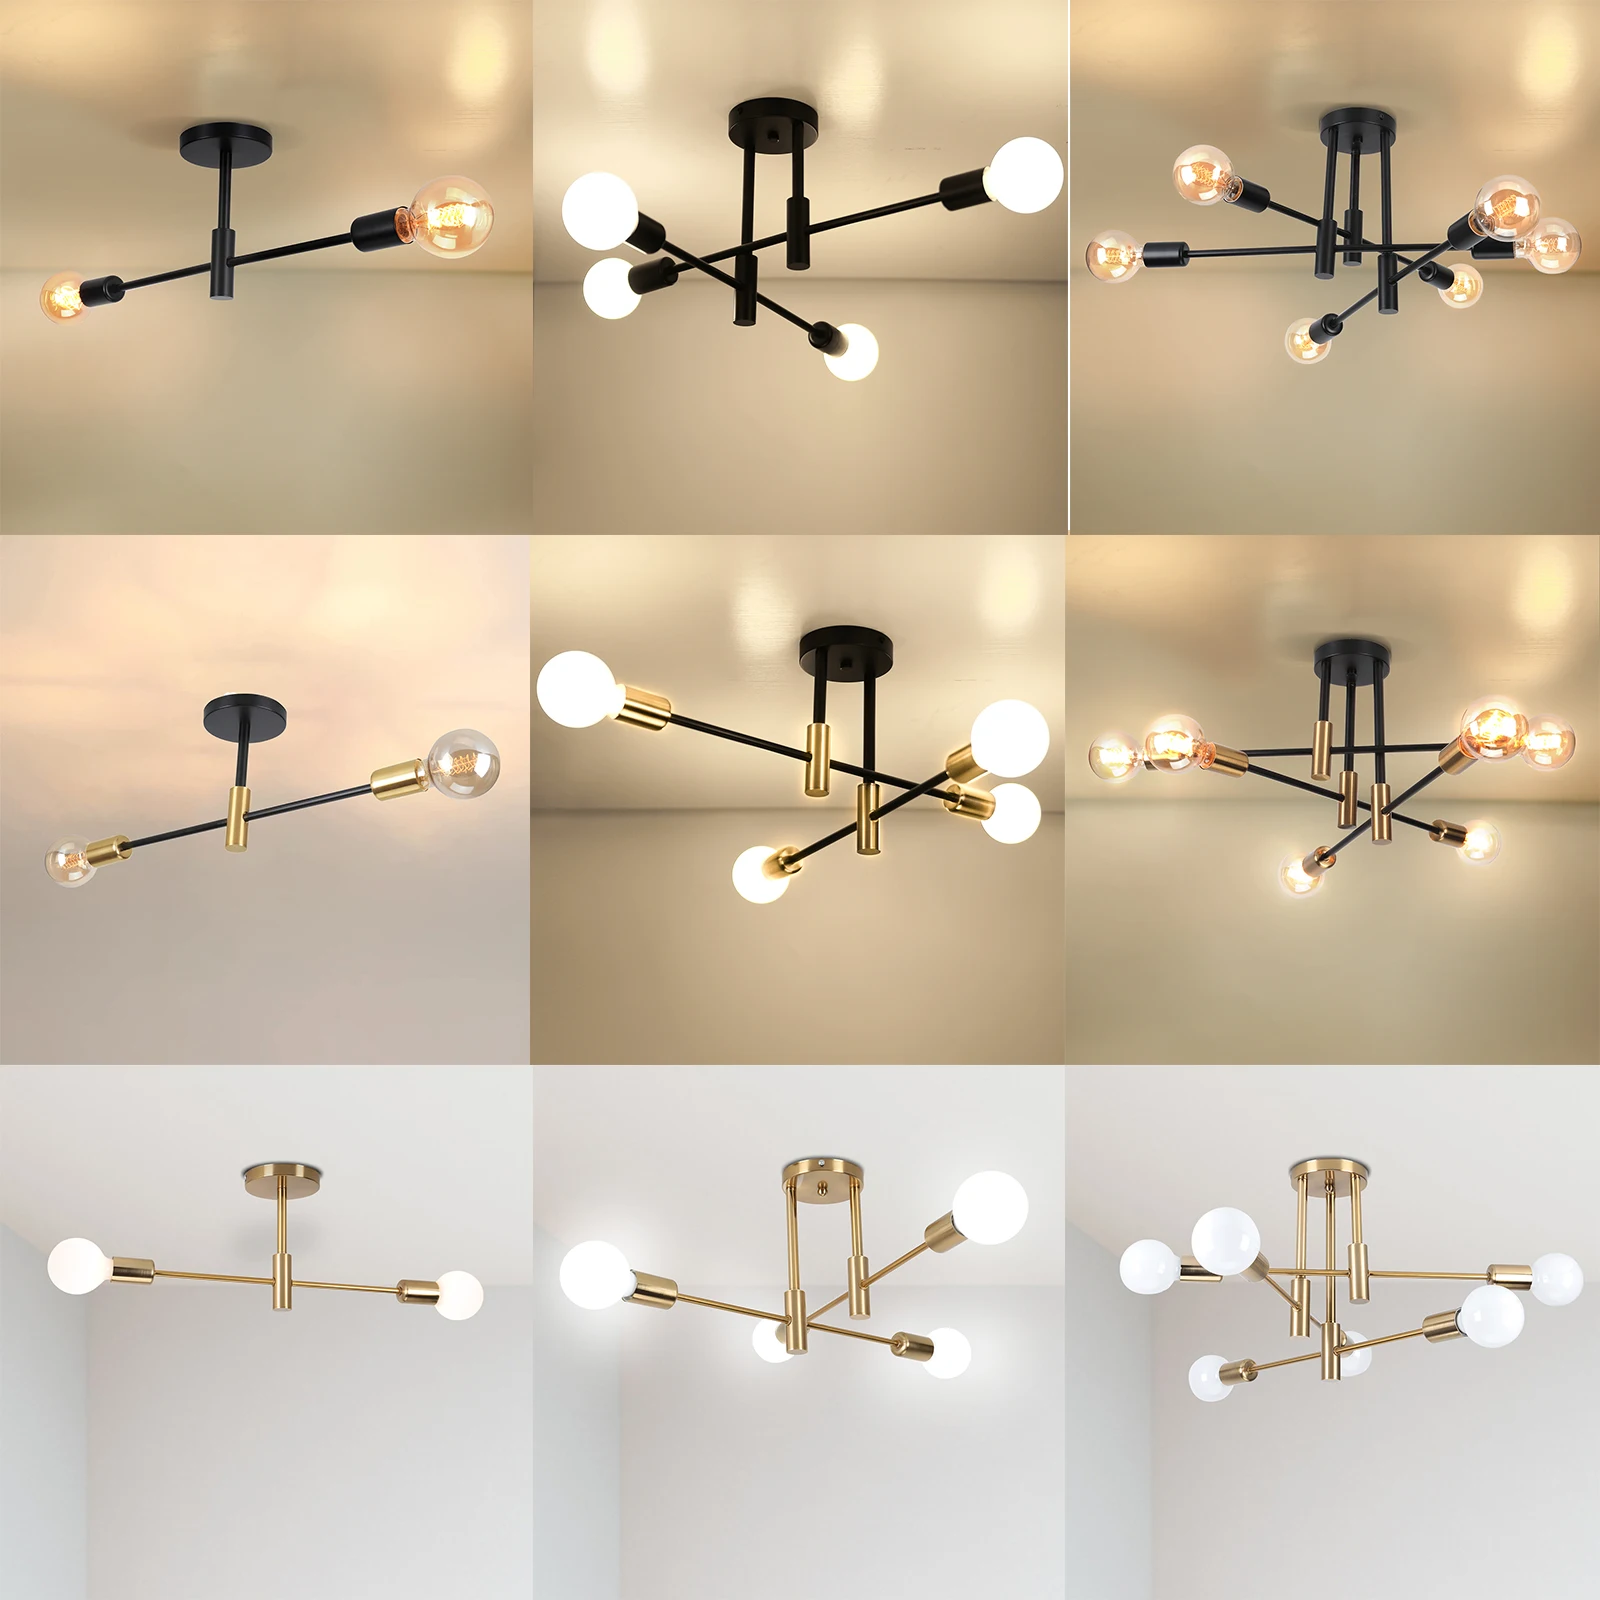 Gold led ceiling chandeliers indoor lighting fixtures for bedroom living room cloakroom thumb200